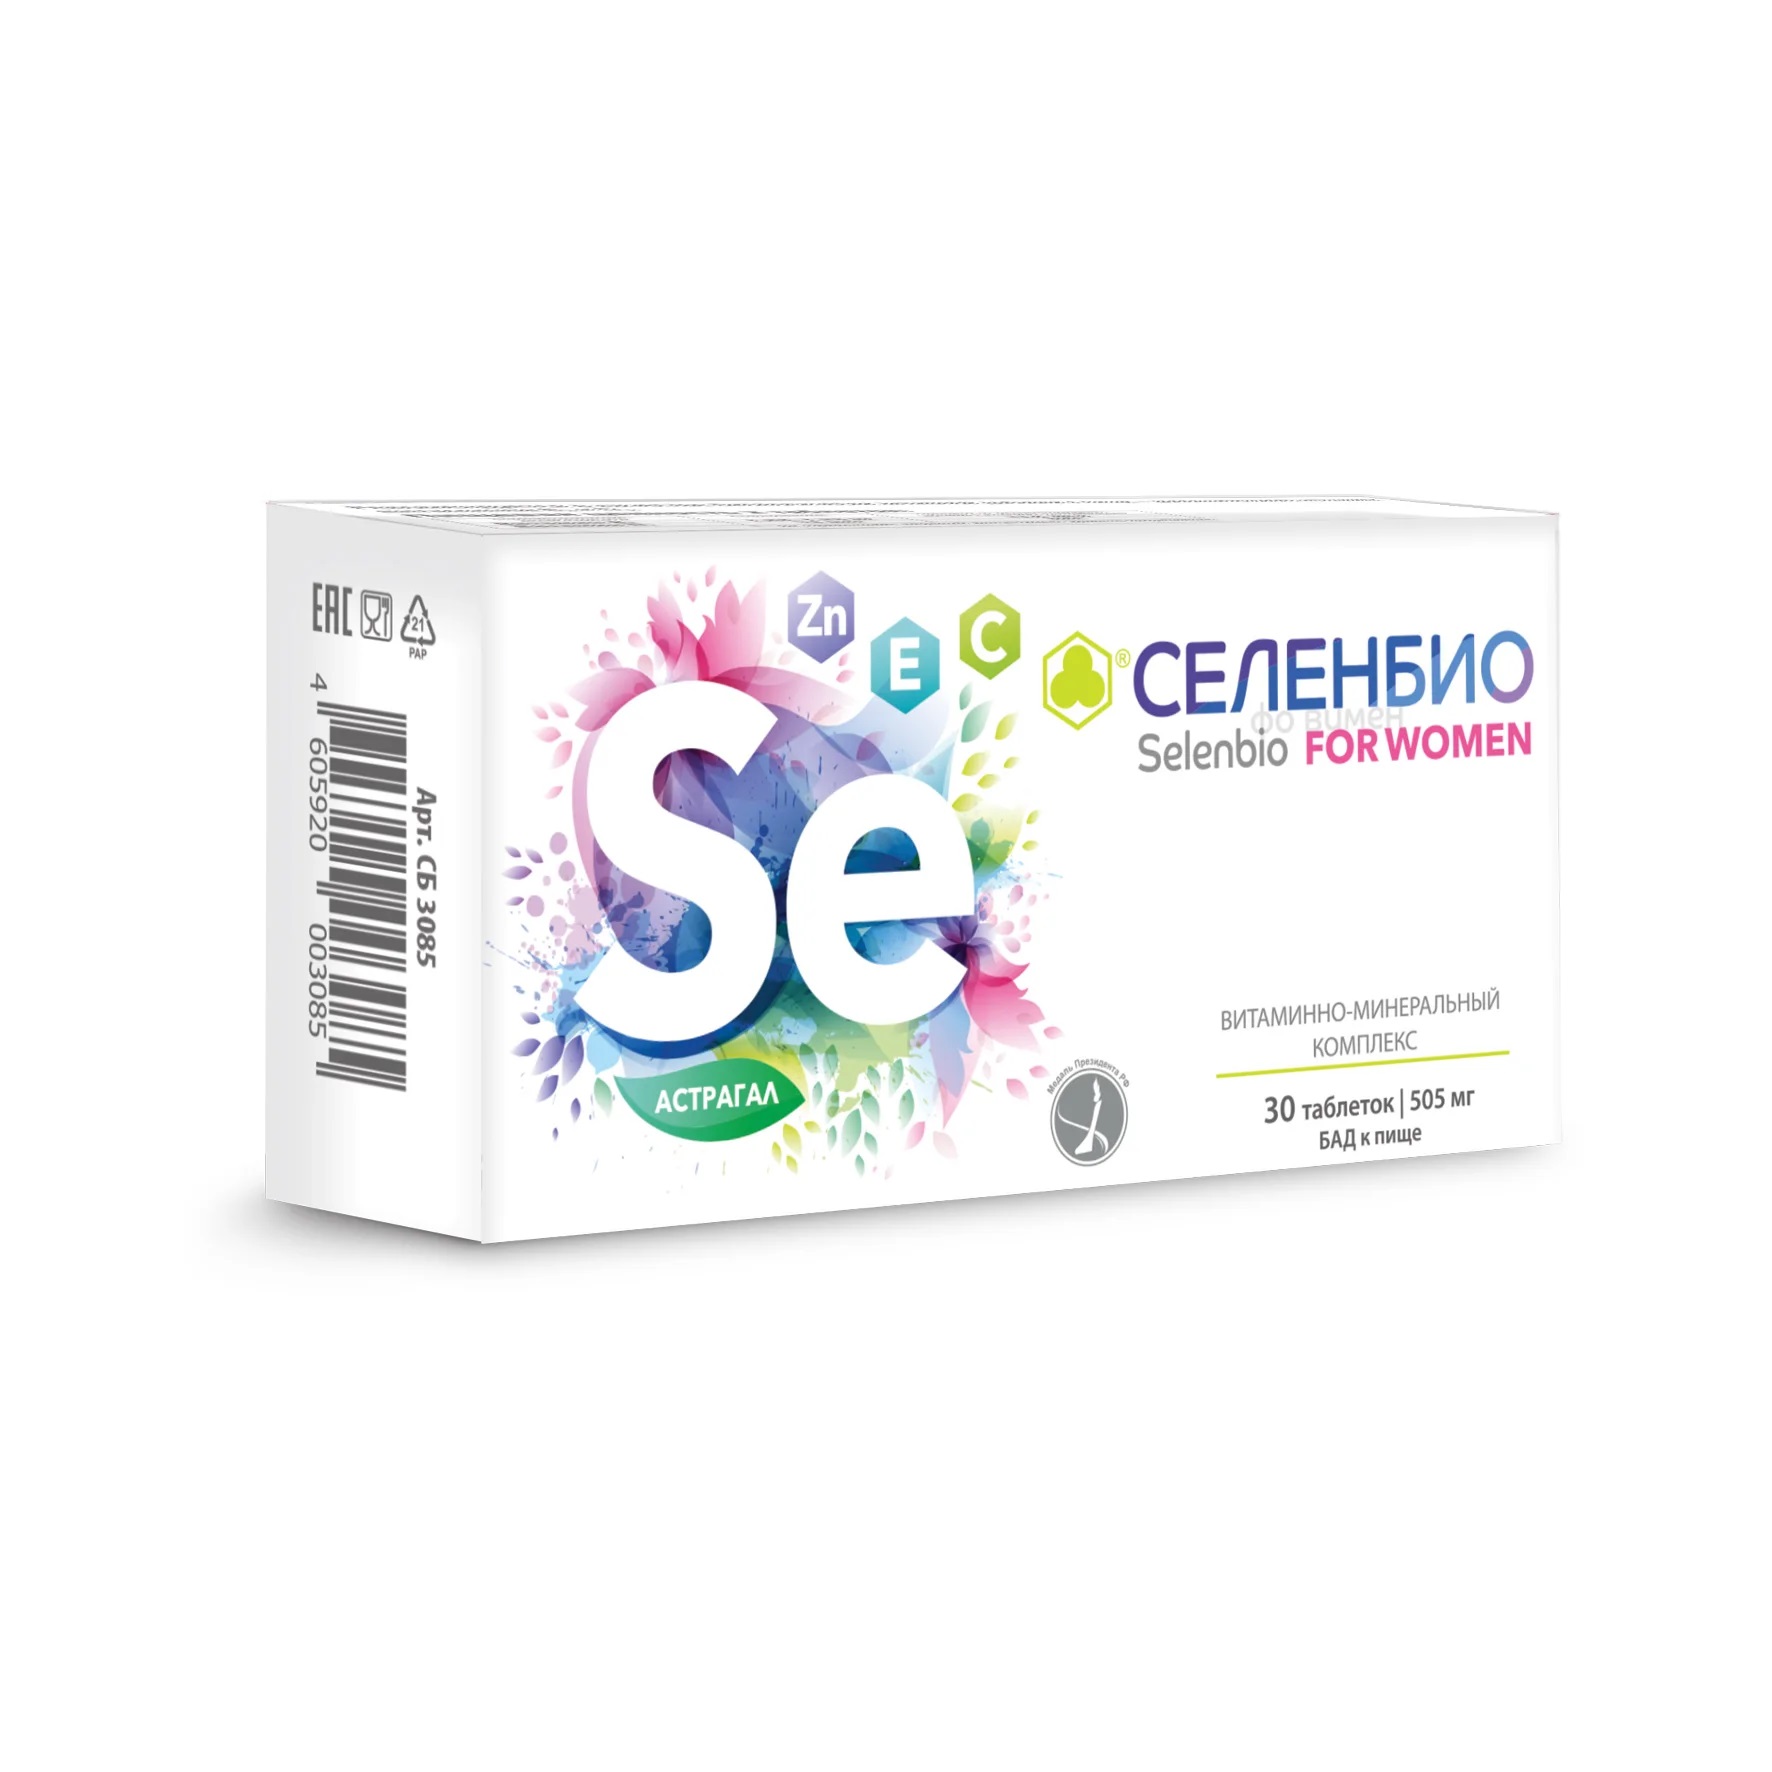 Селенбио for women, таблетки 505 мг, 30 шт.